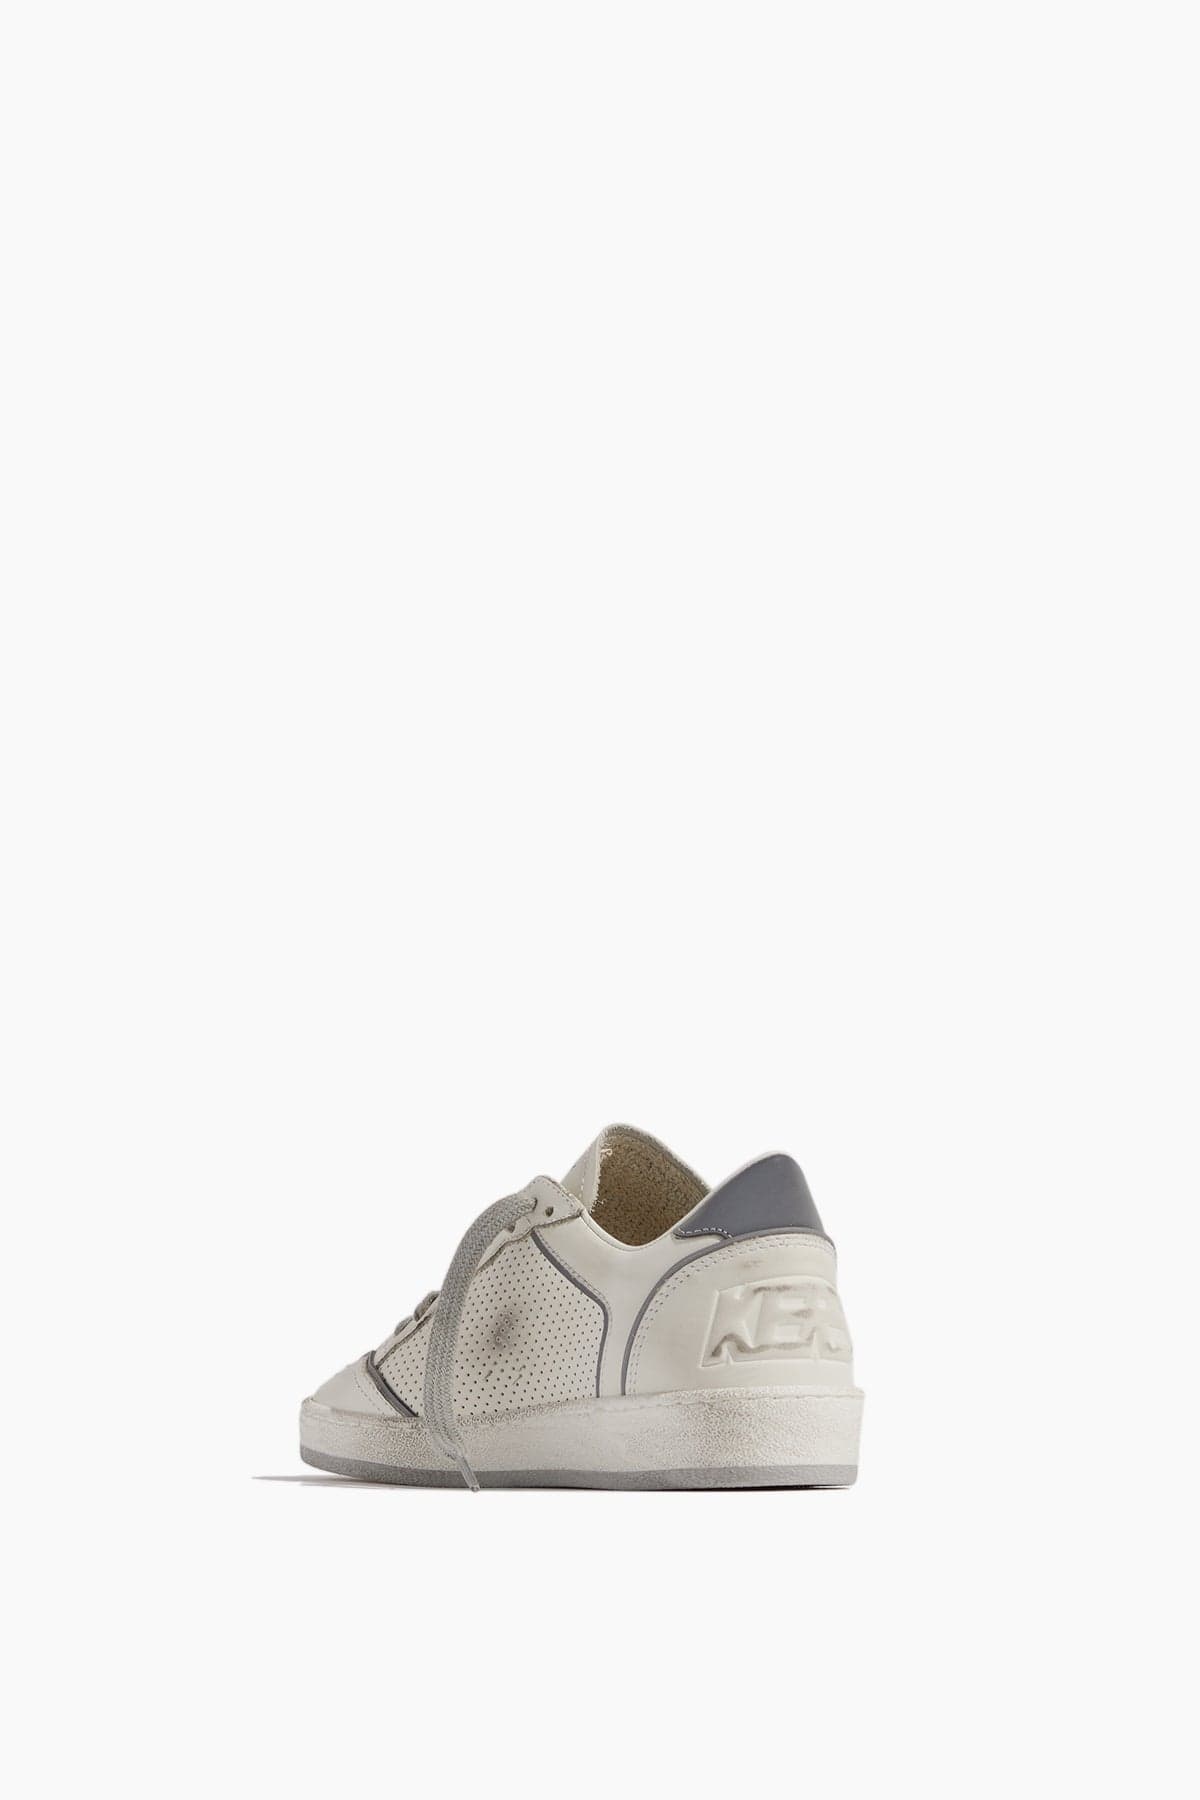 Ball Star Sneaker in White/Silver - 2